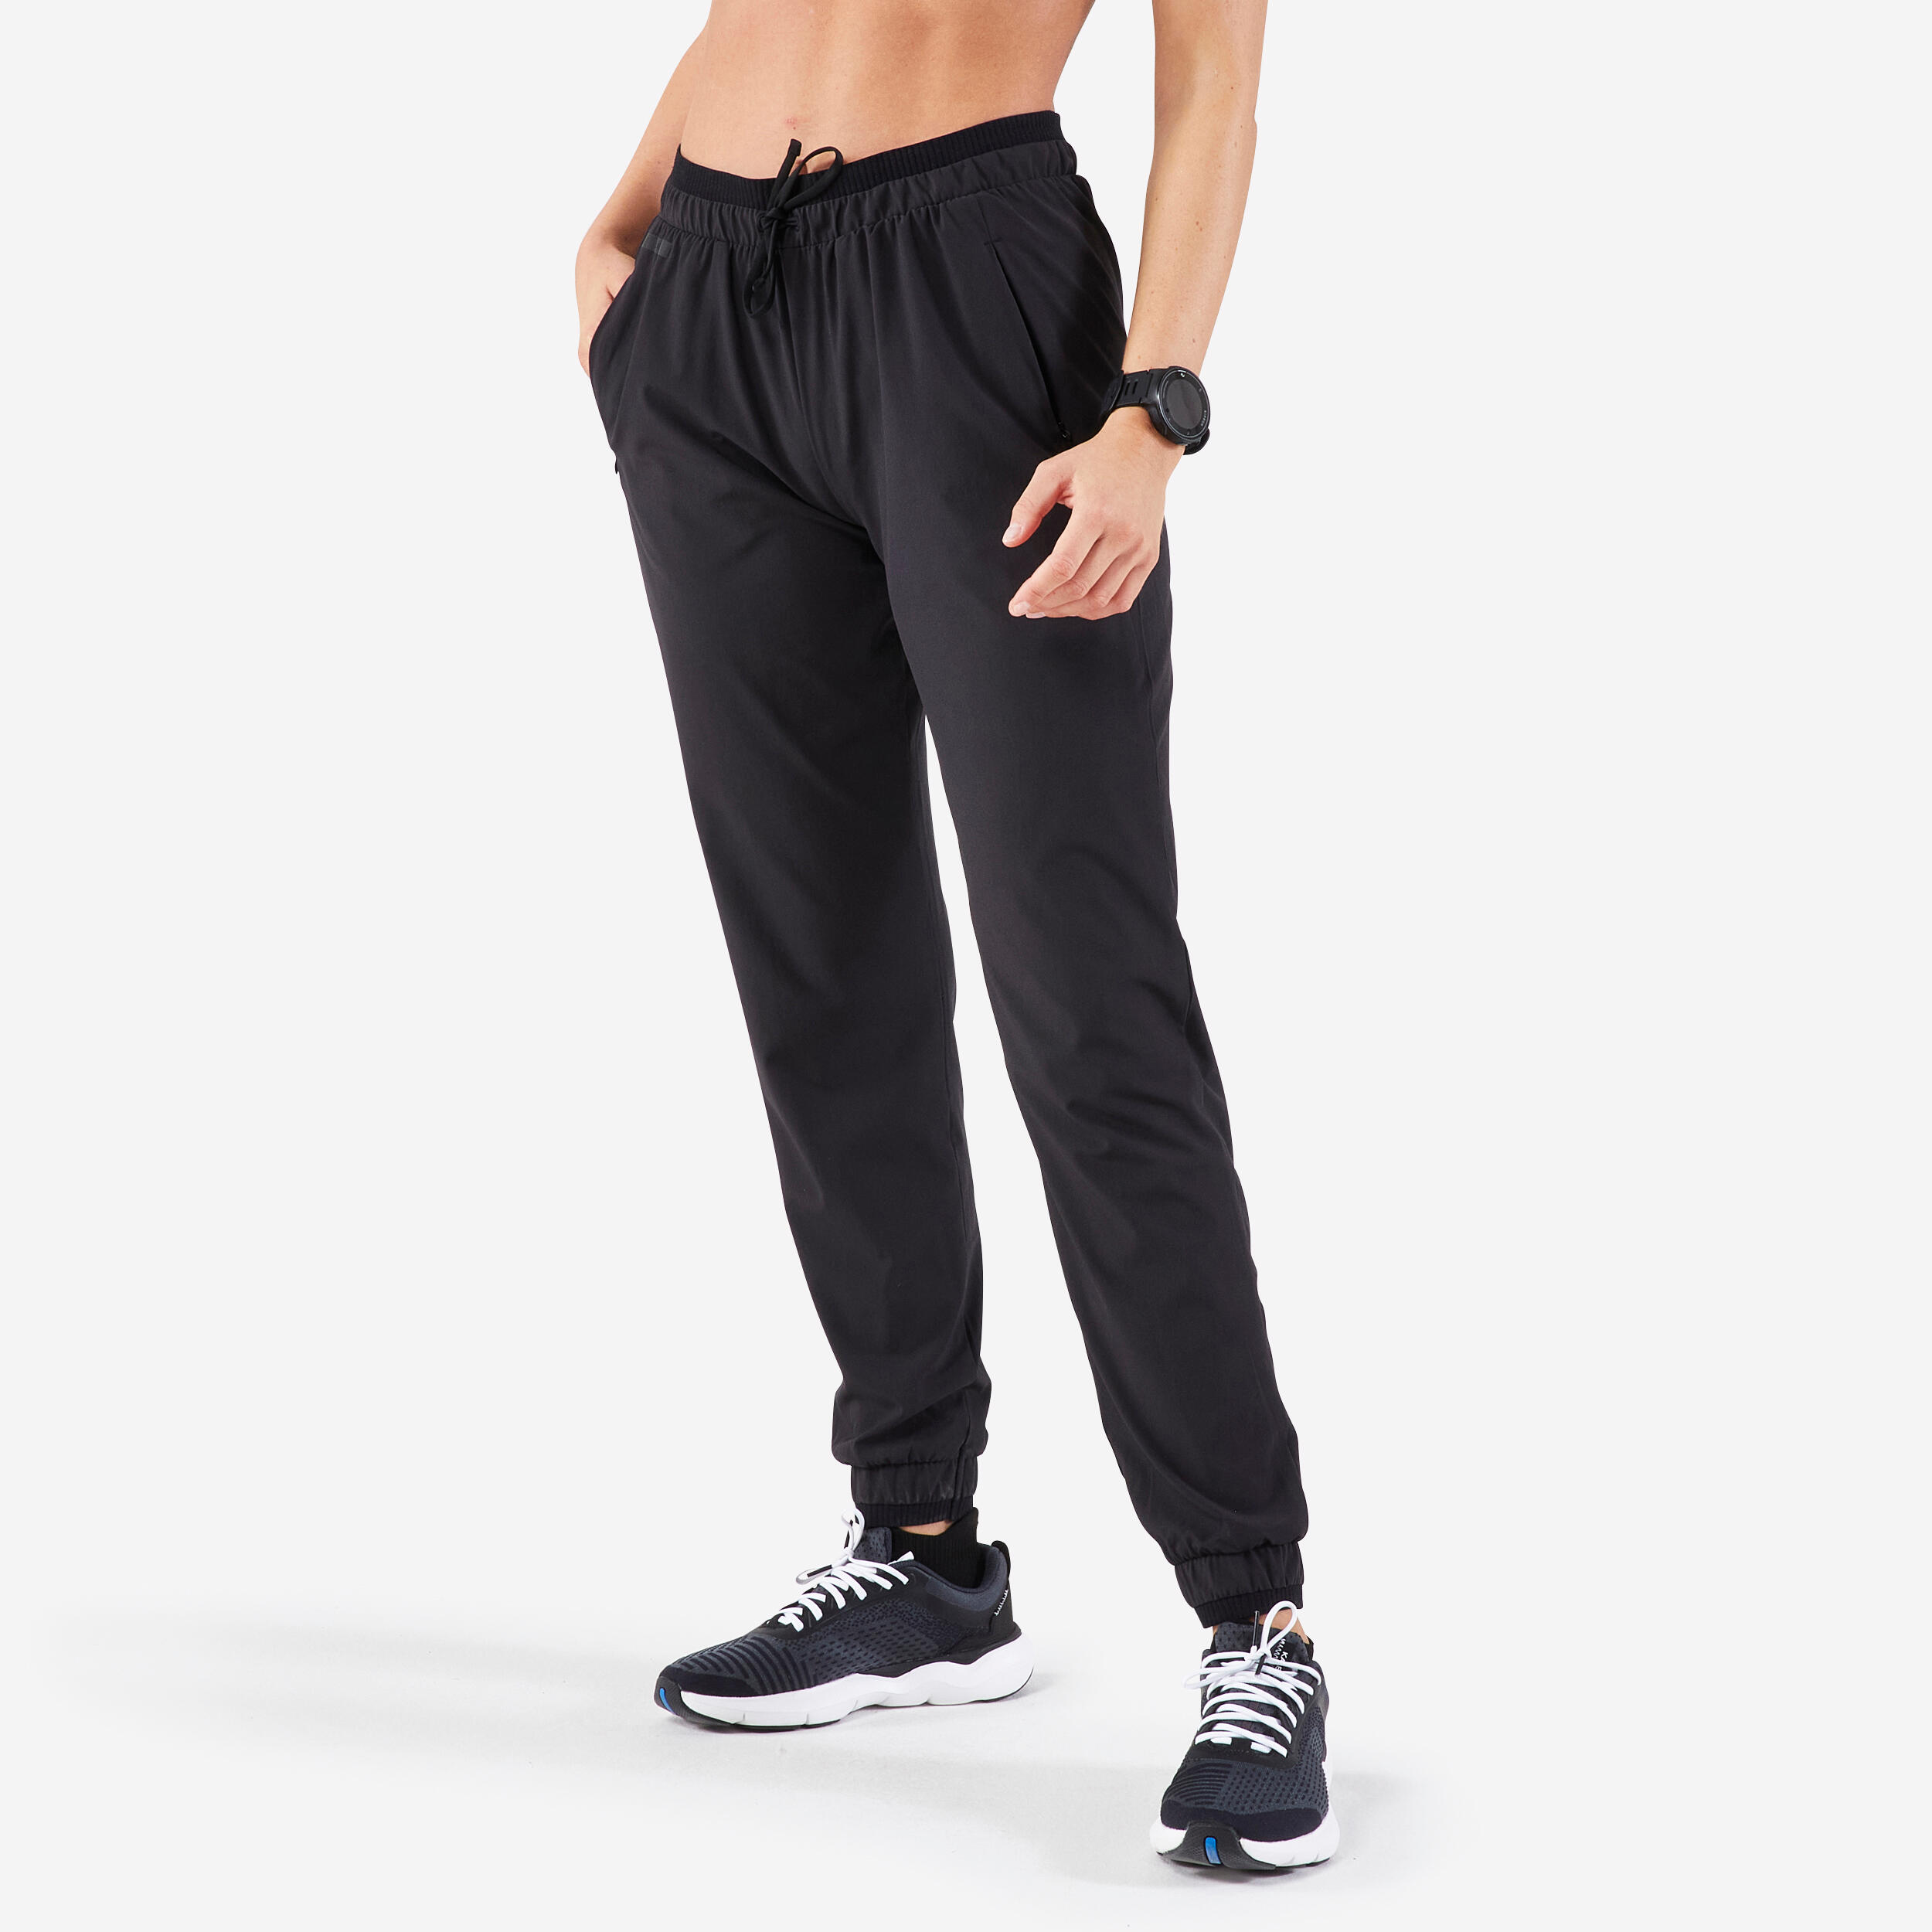 Women’s Breathable Warm Pants - SH 500 Black